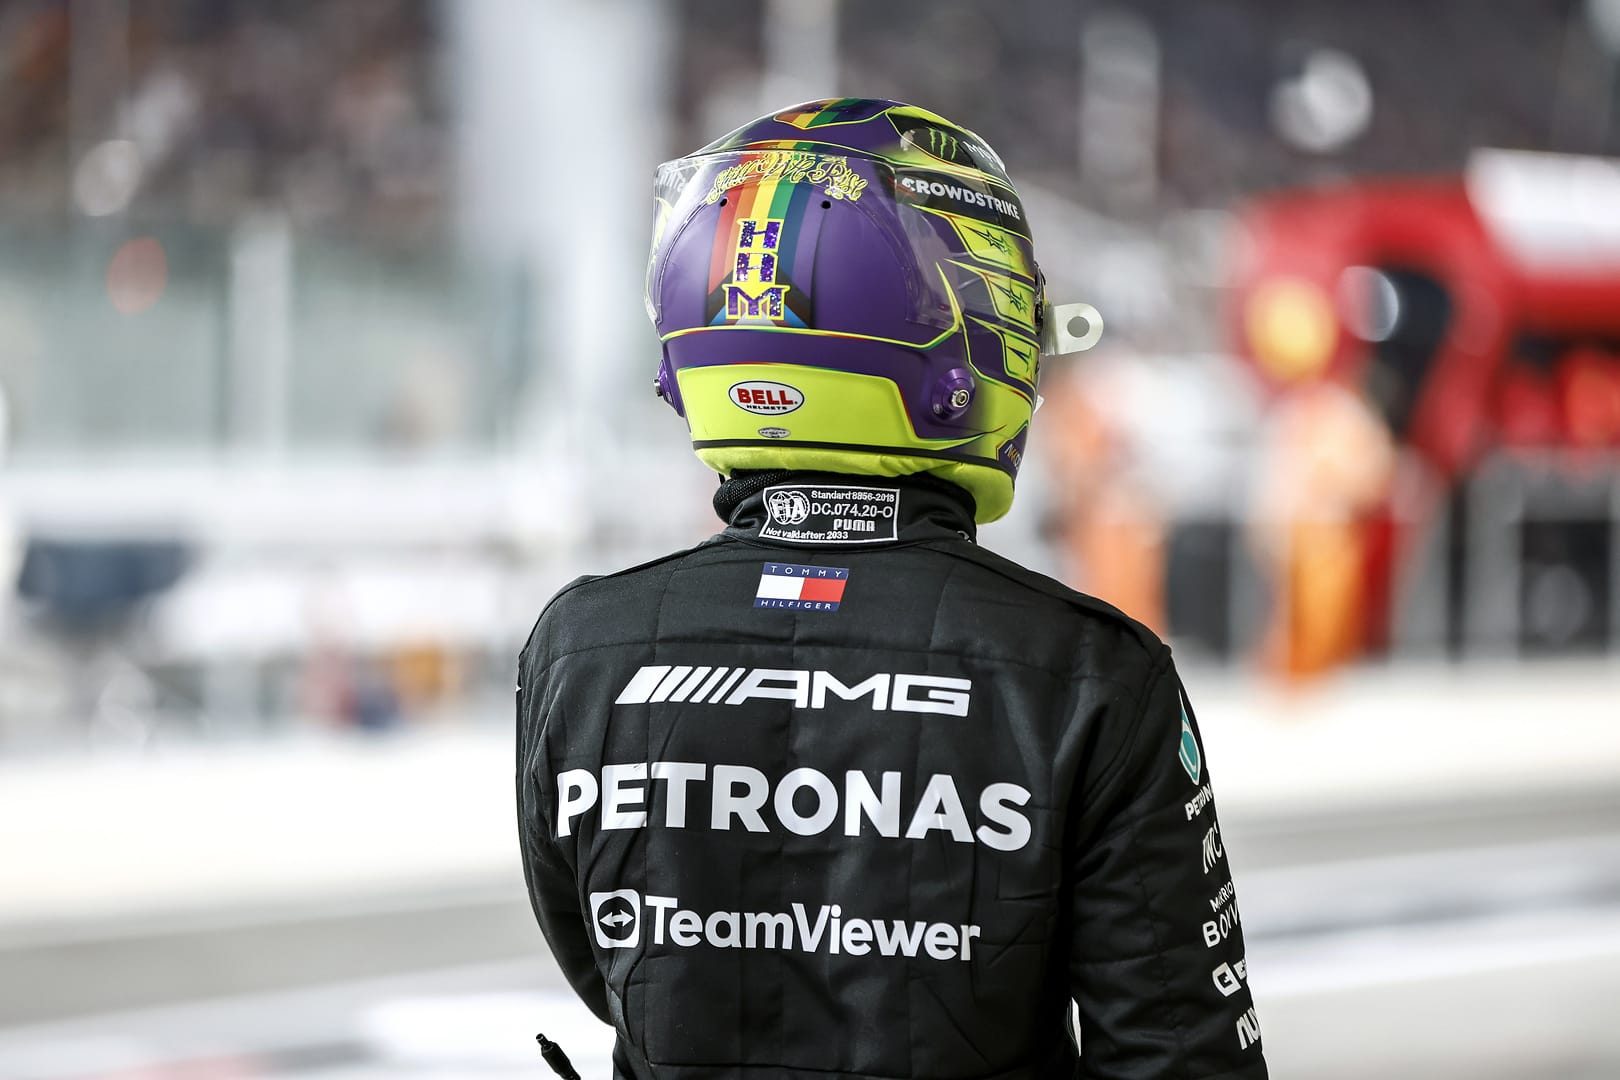 What Helmet Does Lewis Hamilton Wear?